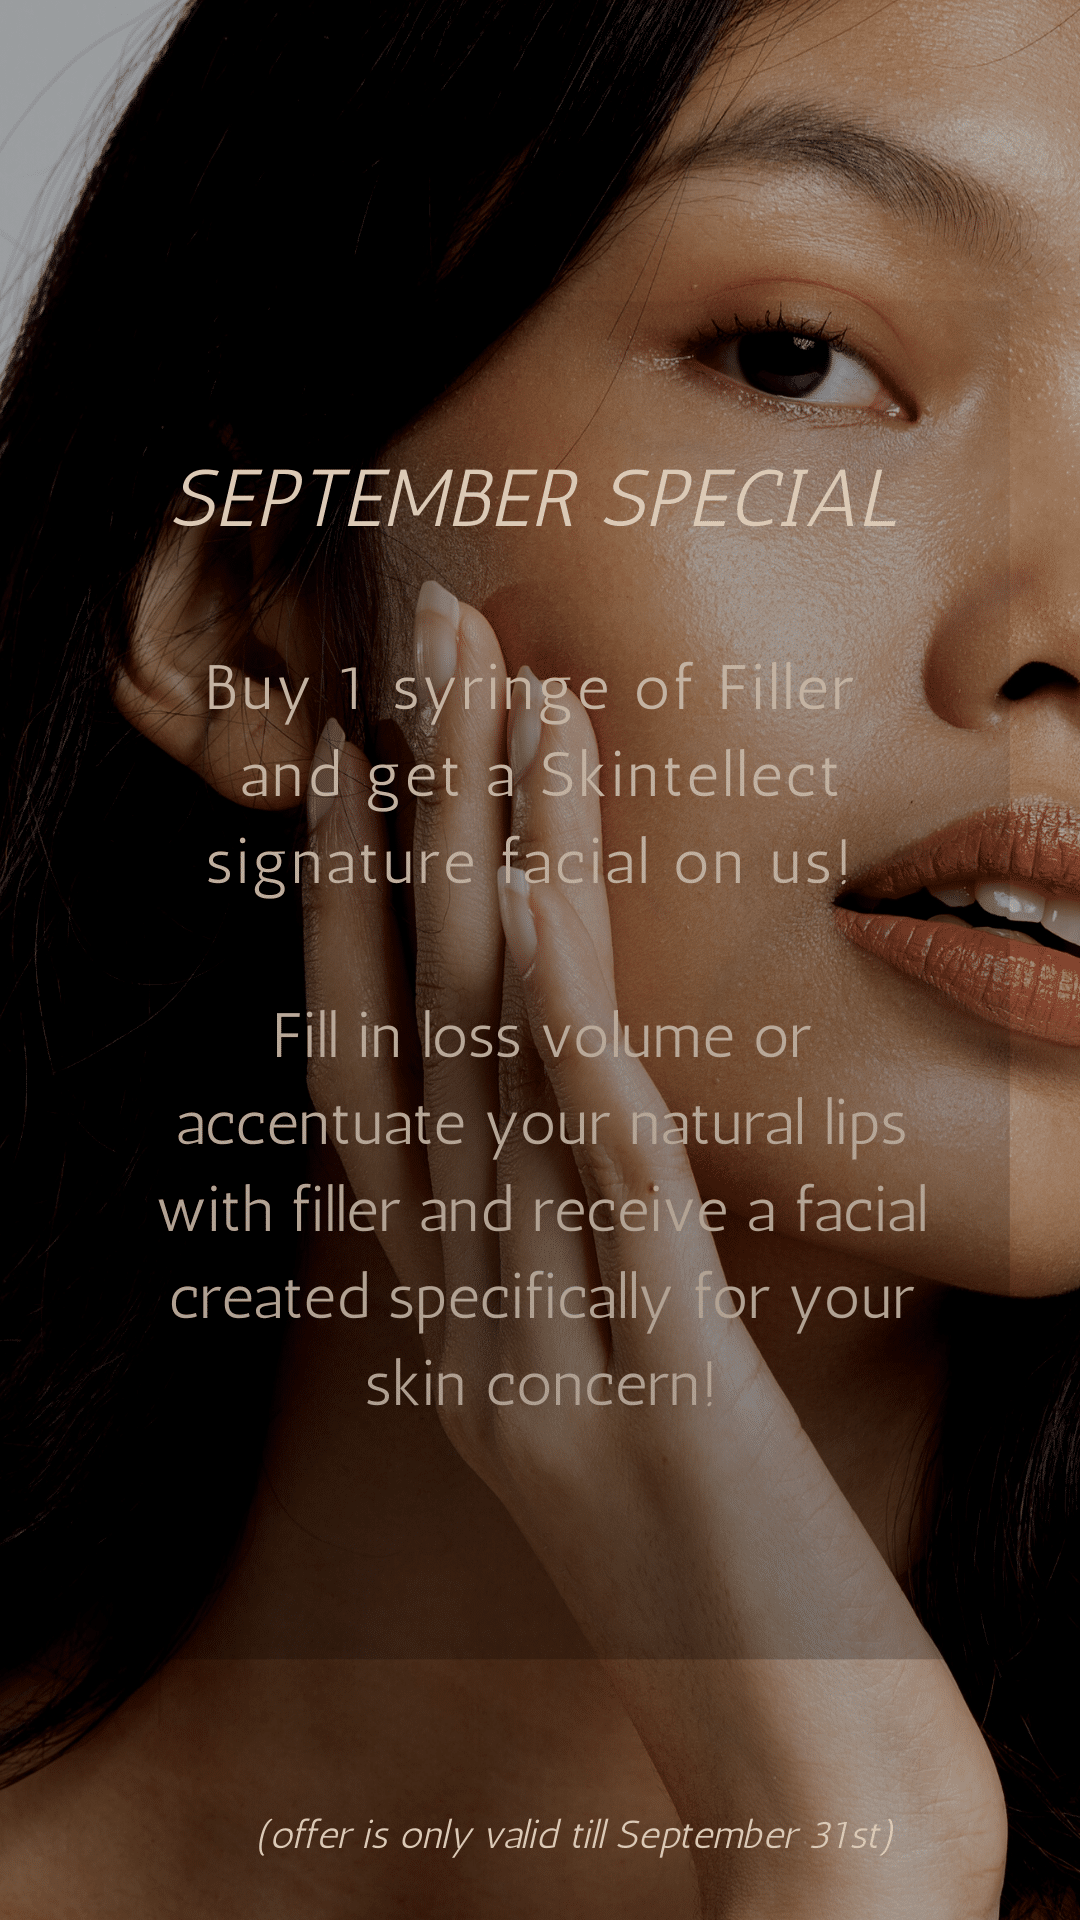 September speciasl|Skintellect|Filler and facial